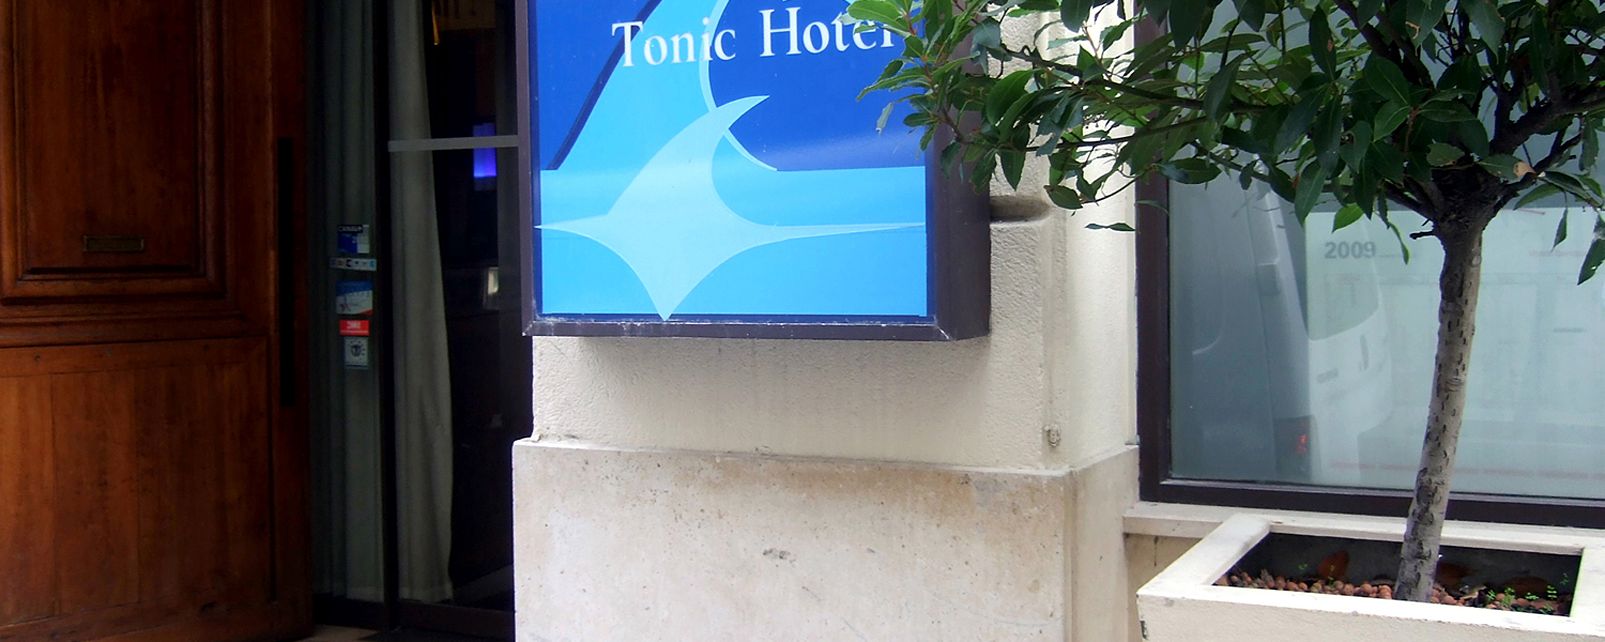 Hotel Tonic Hotel du Louvre